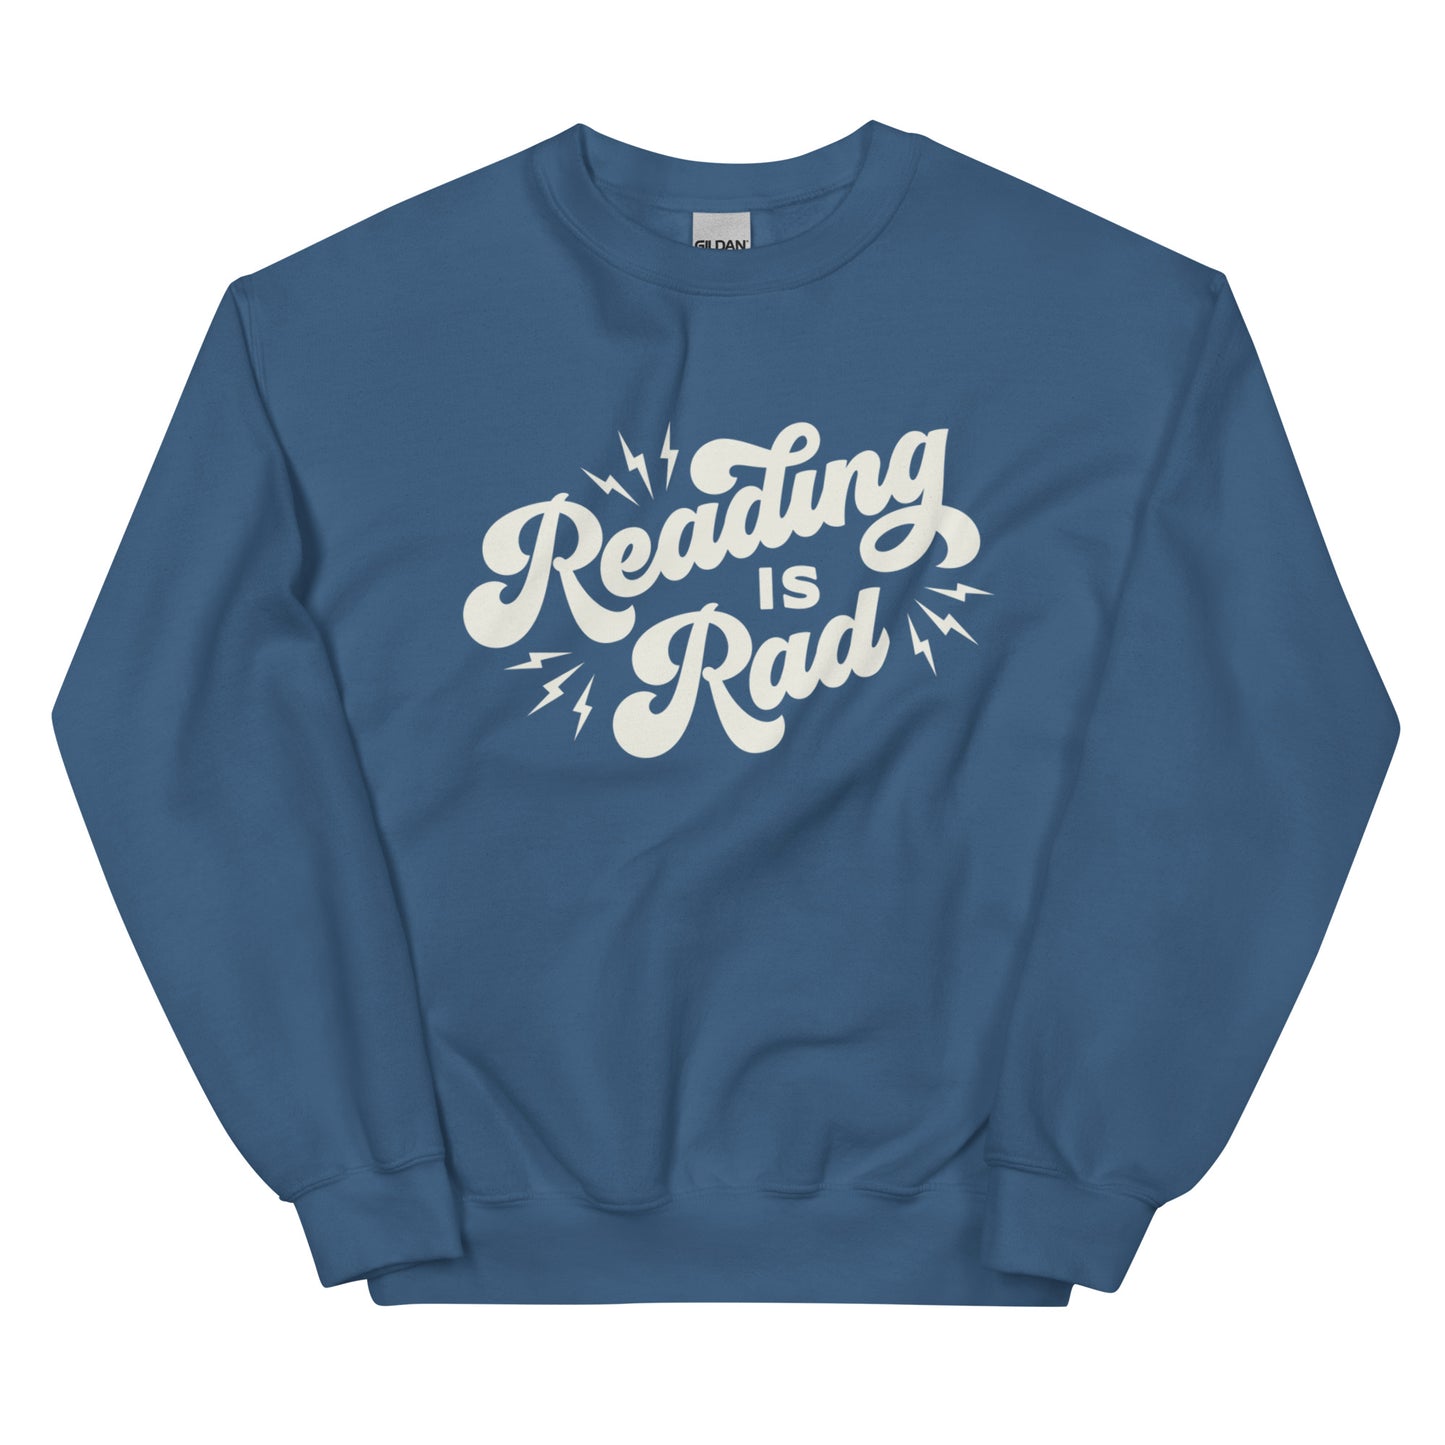 Reading is Rad Sweatshirt